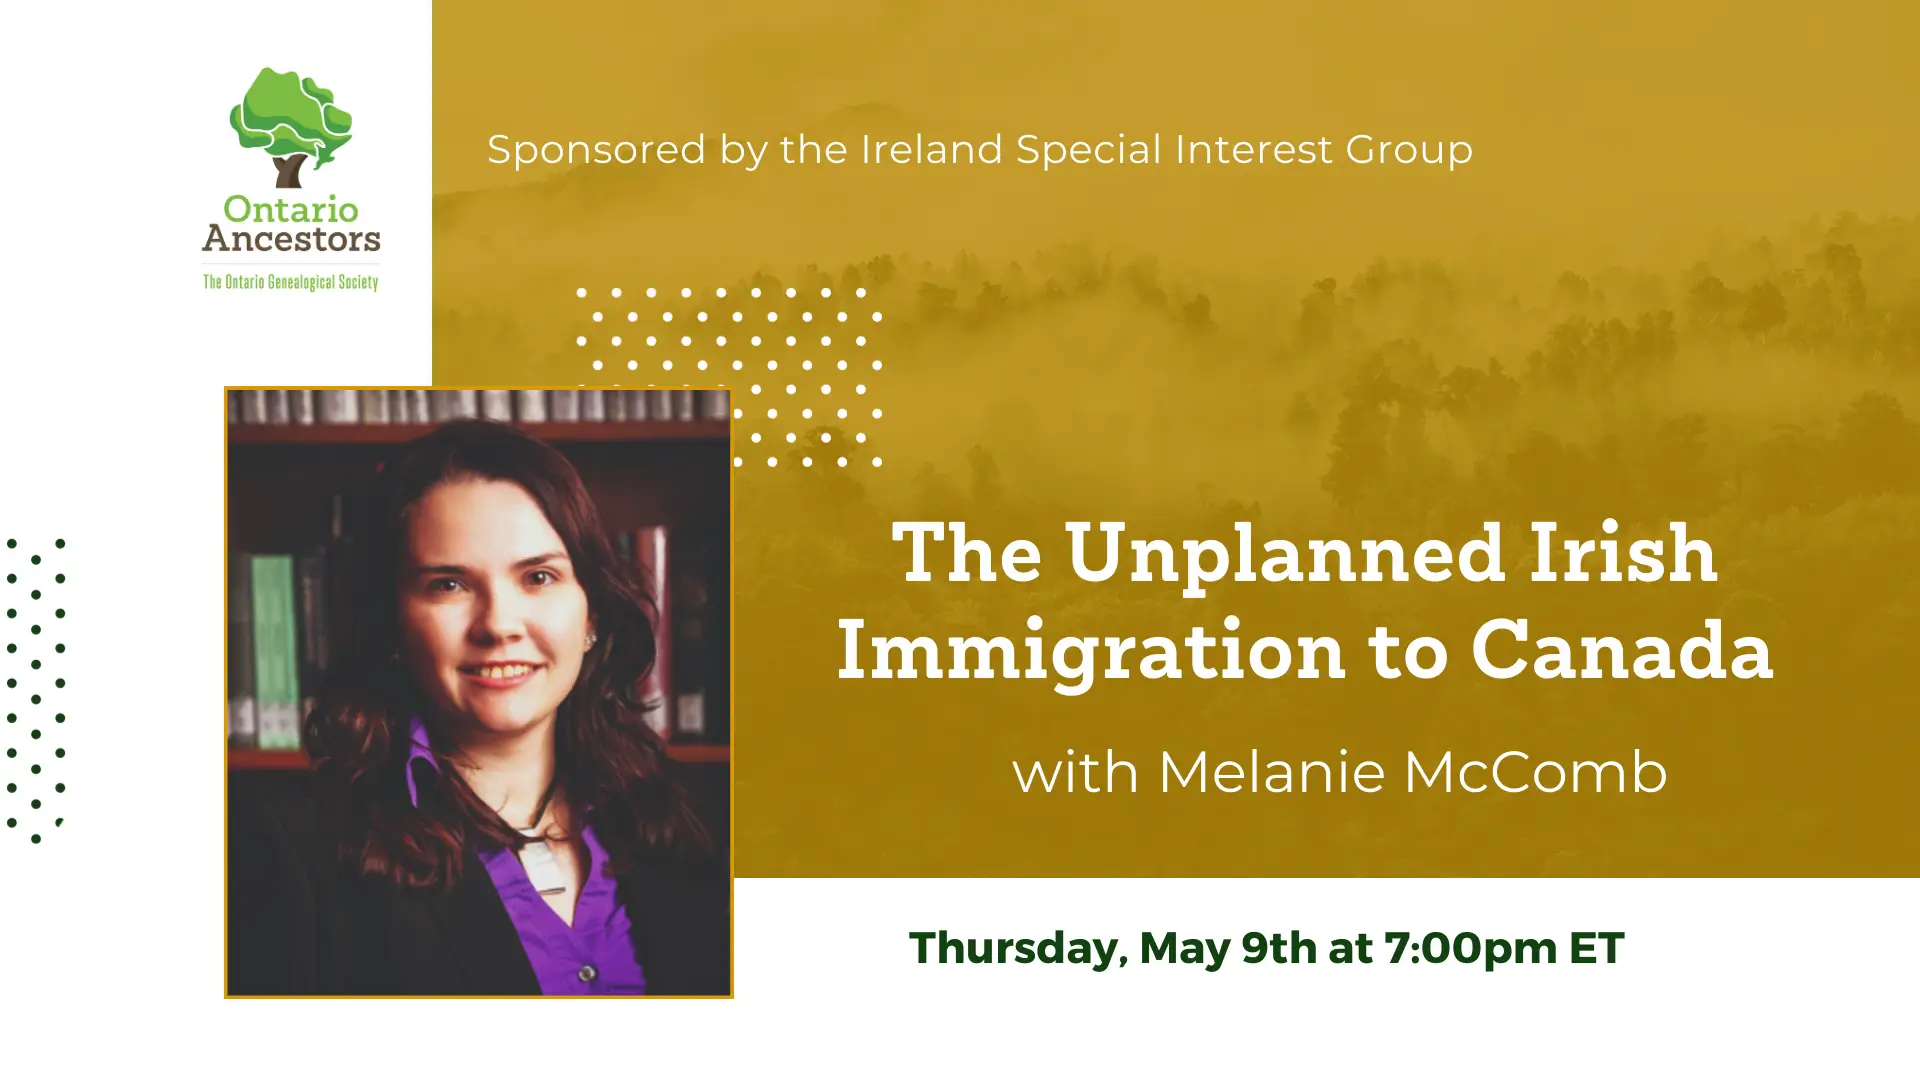 Ireland SIG sponsored - The Unplanned Irish Immigration to Canada - Melanie McComb